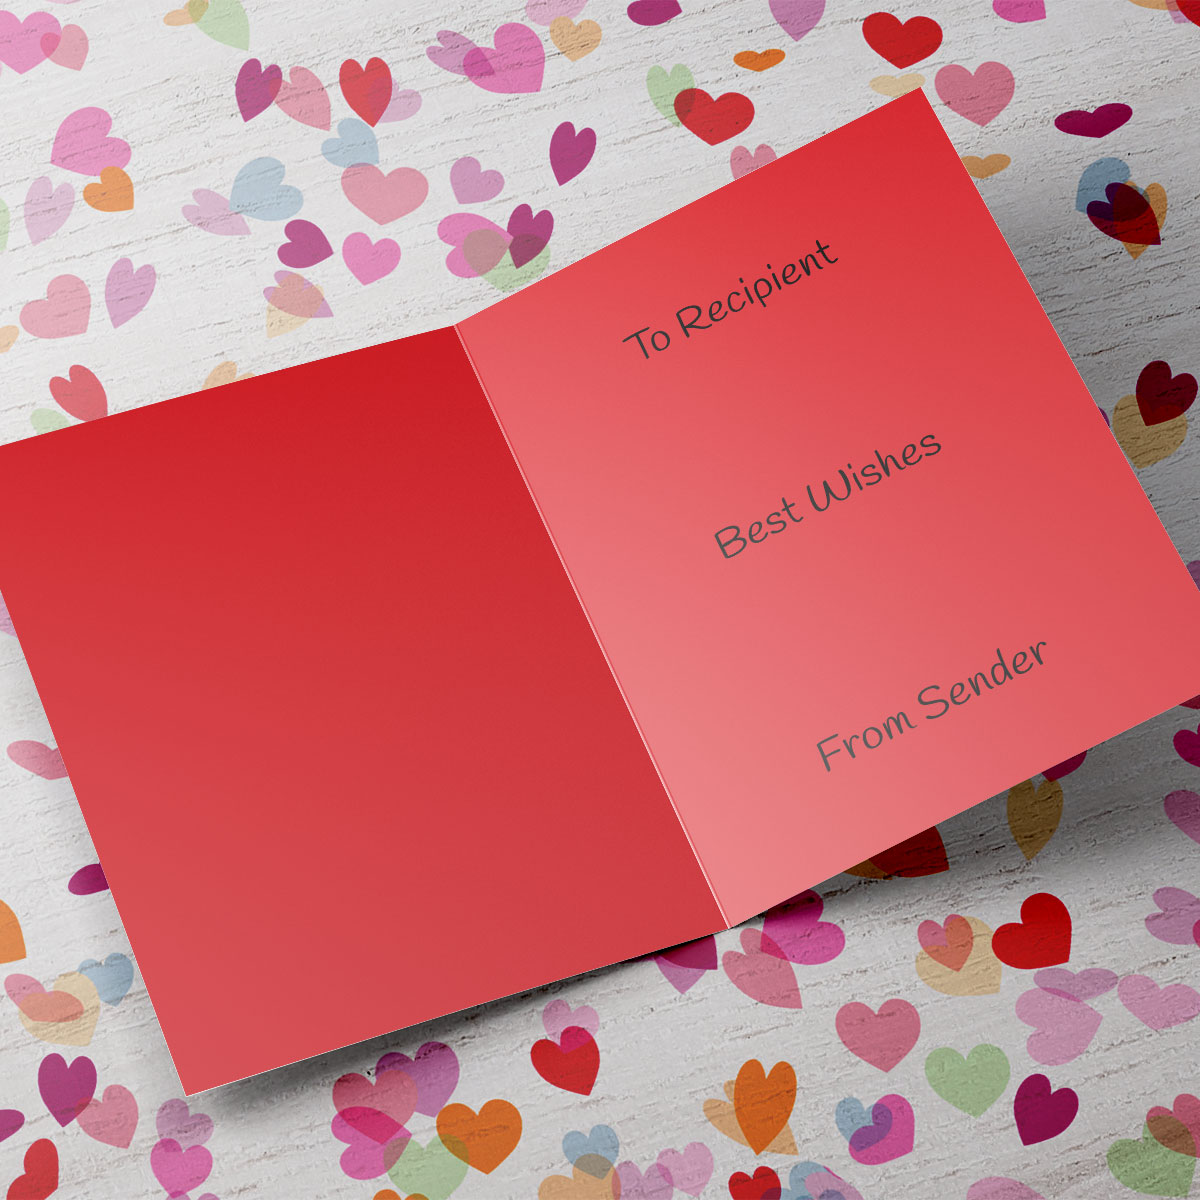 Personalised Card - Roses & Ribbon